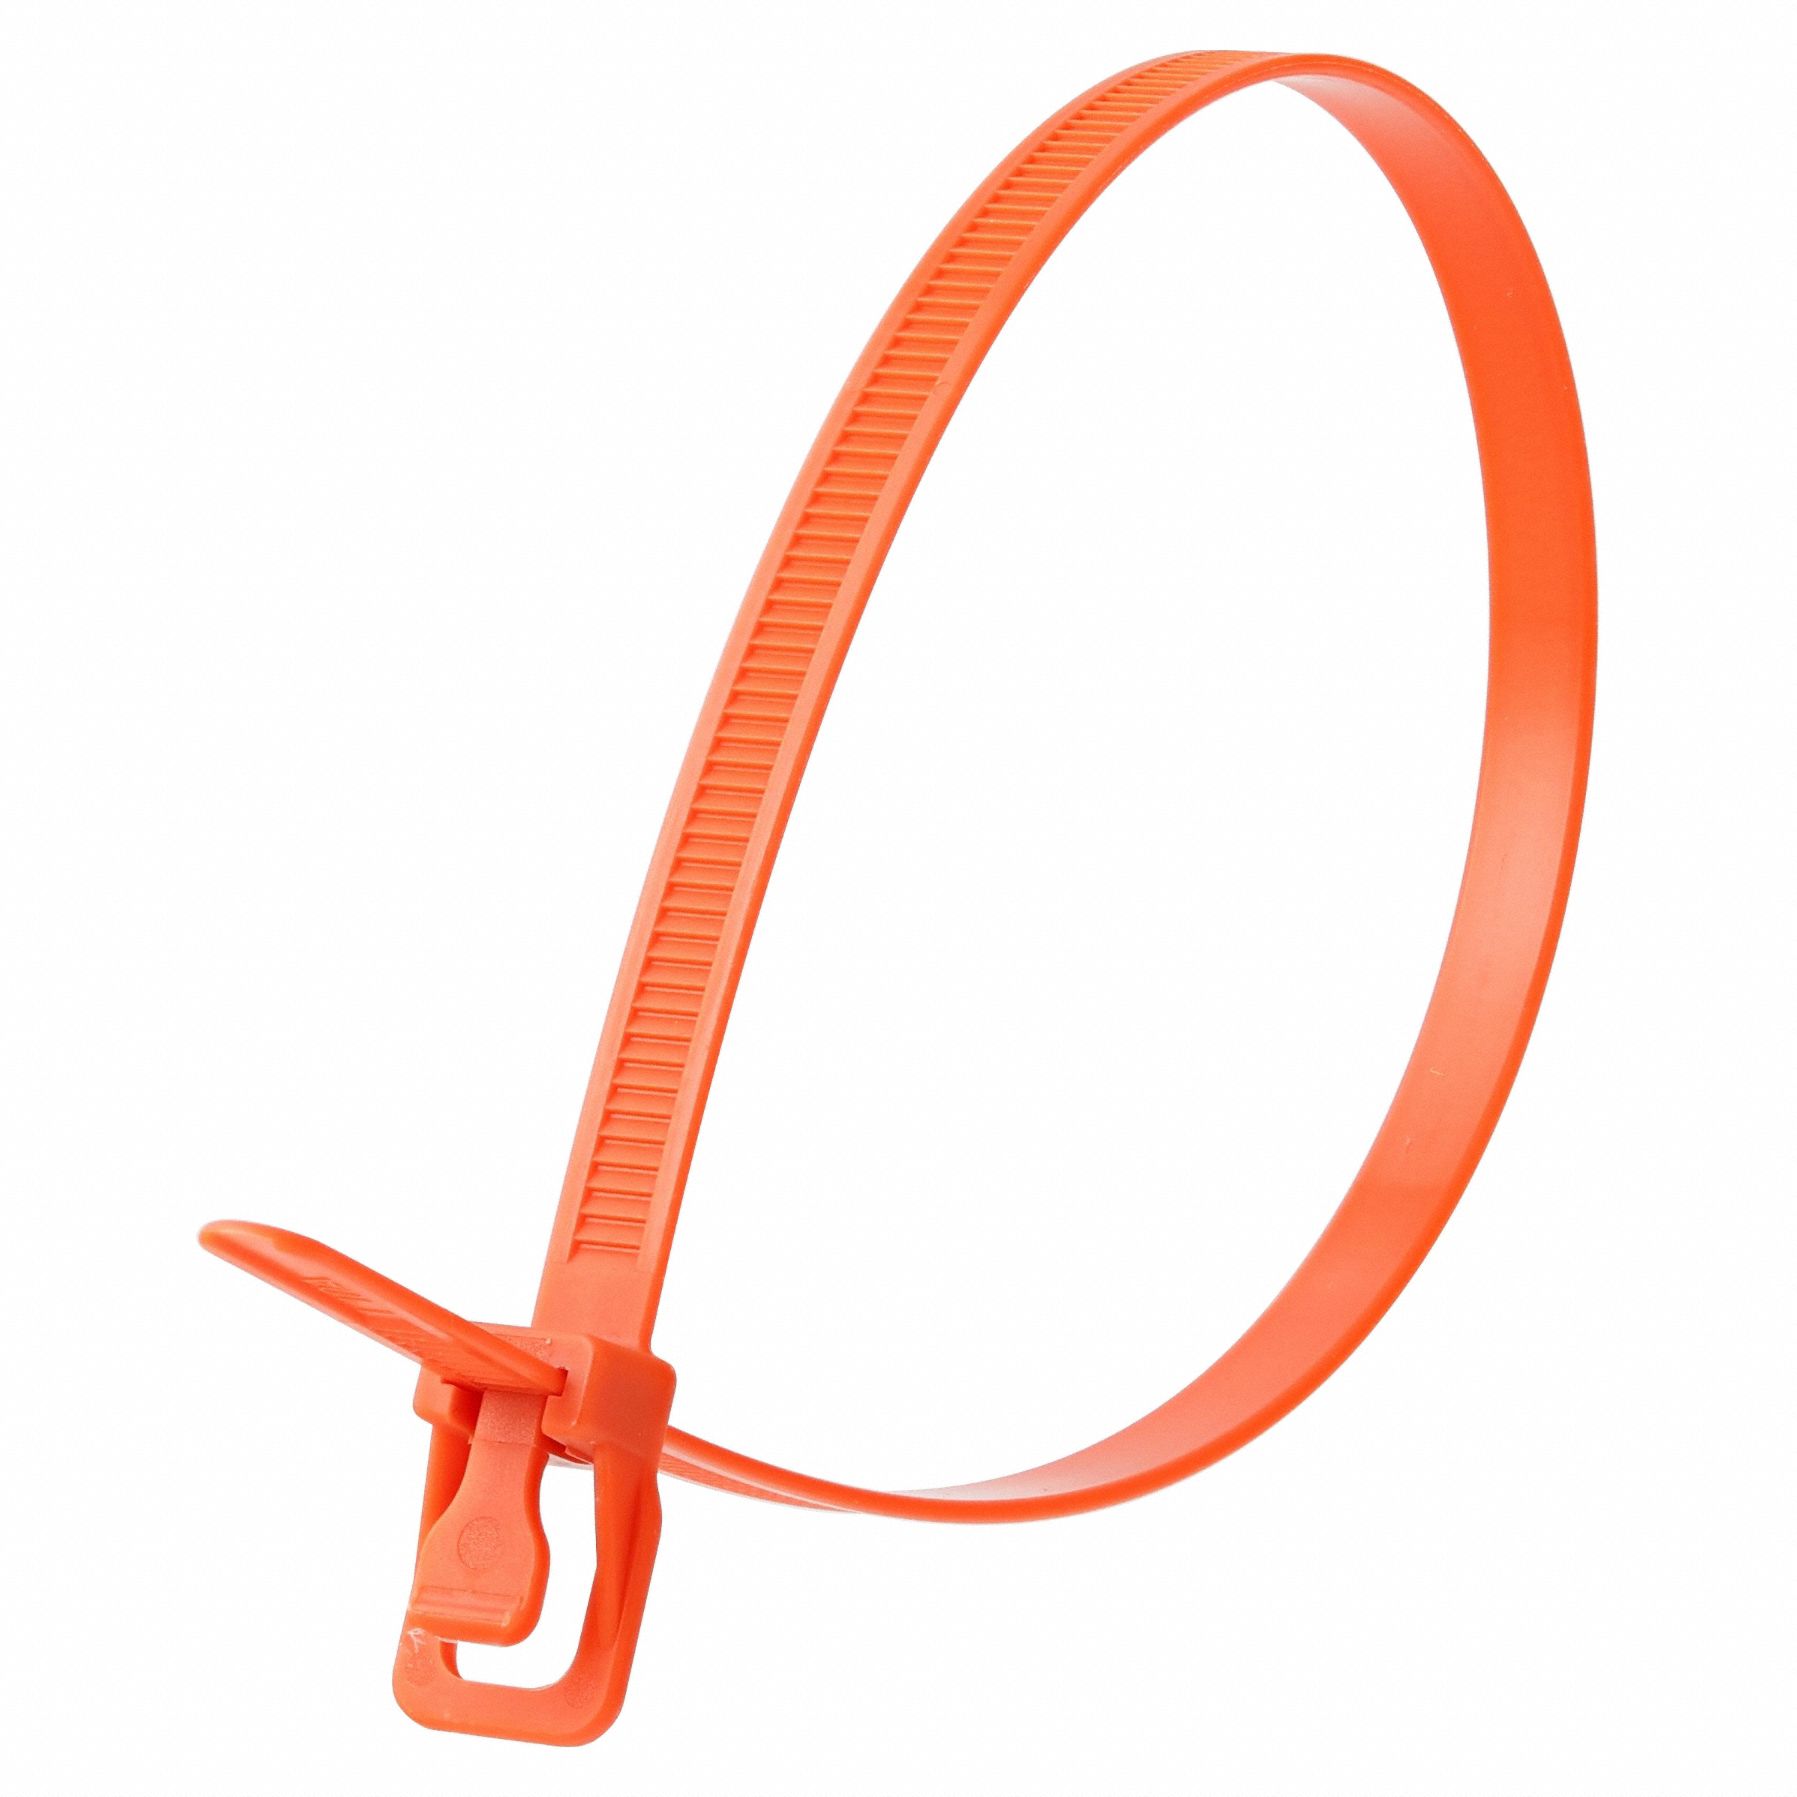 Retyz In Lg Orange Releasable Cable Tie Er Wkt S Or Ta Grainger